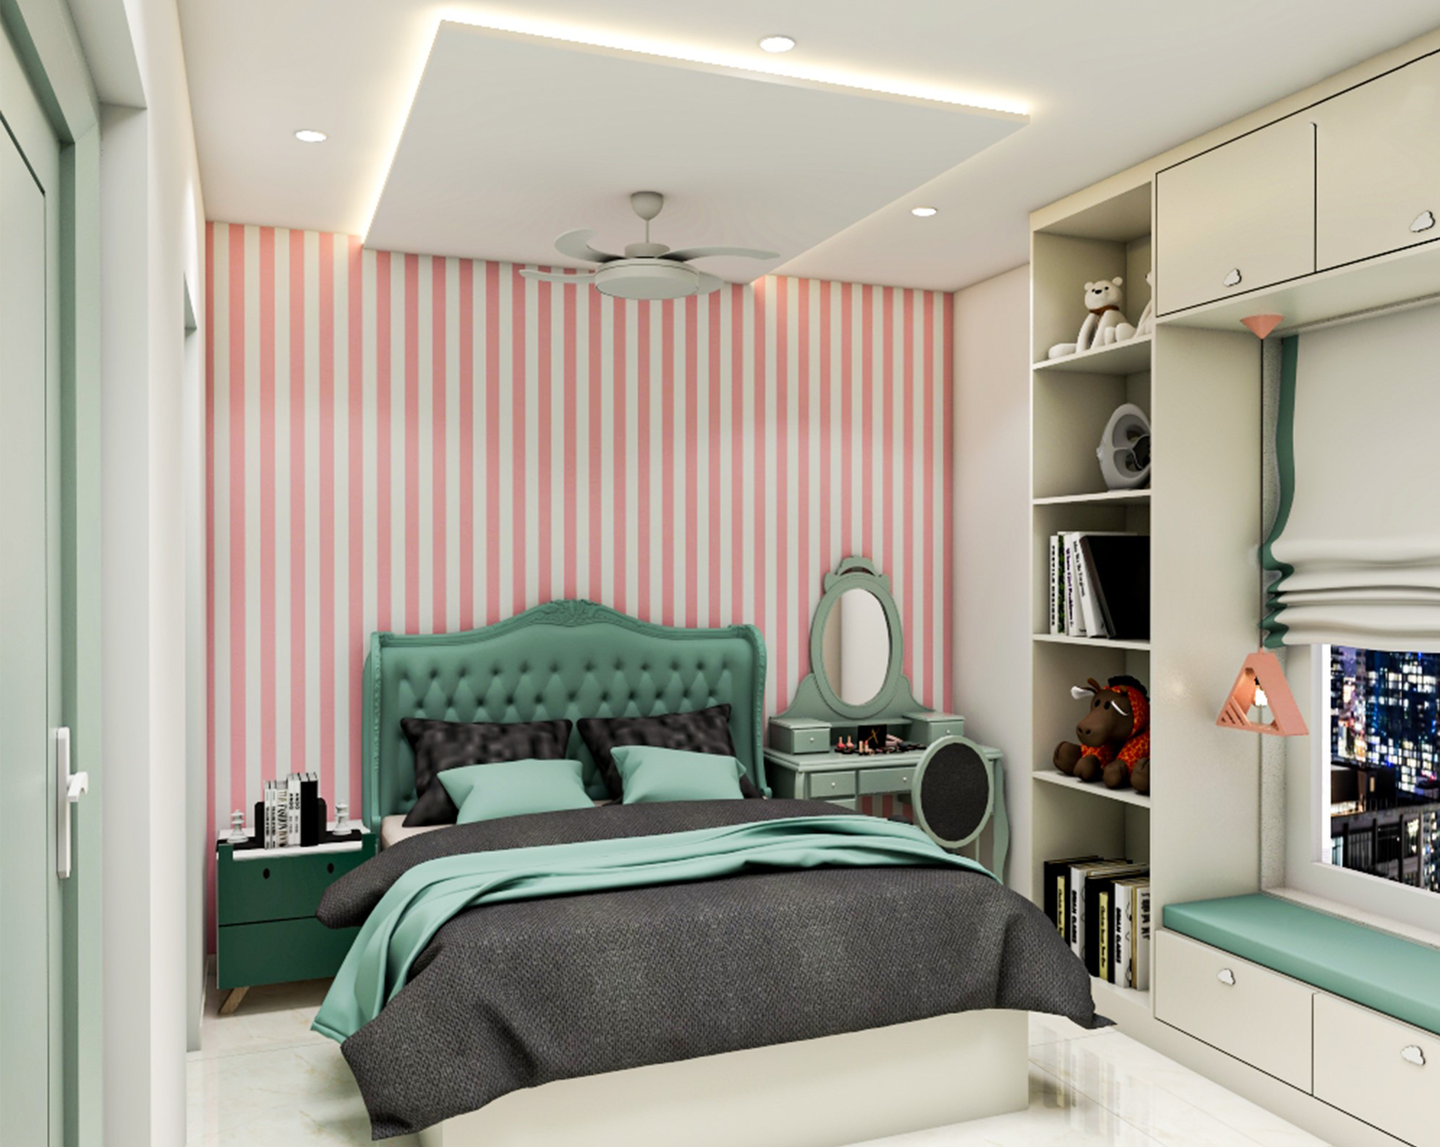 Lively Compact Kids Bedroom Design - Livspace